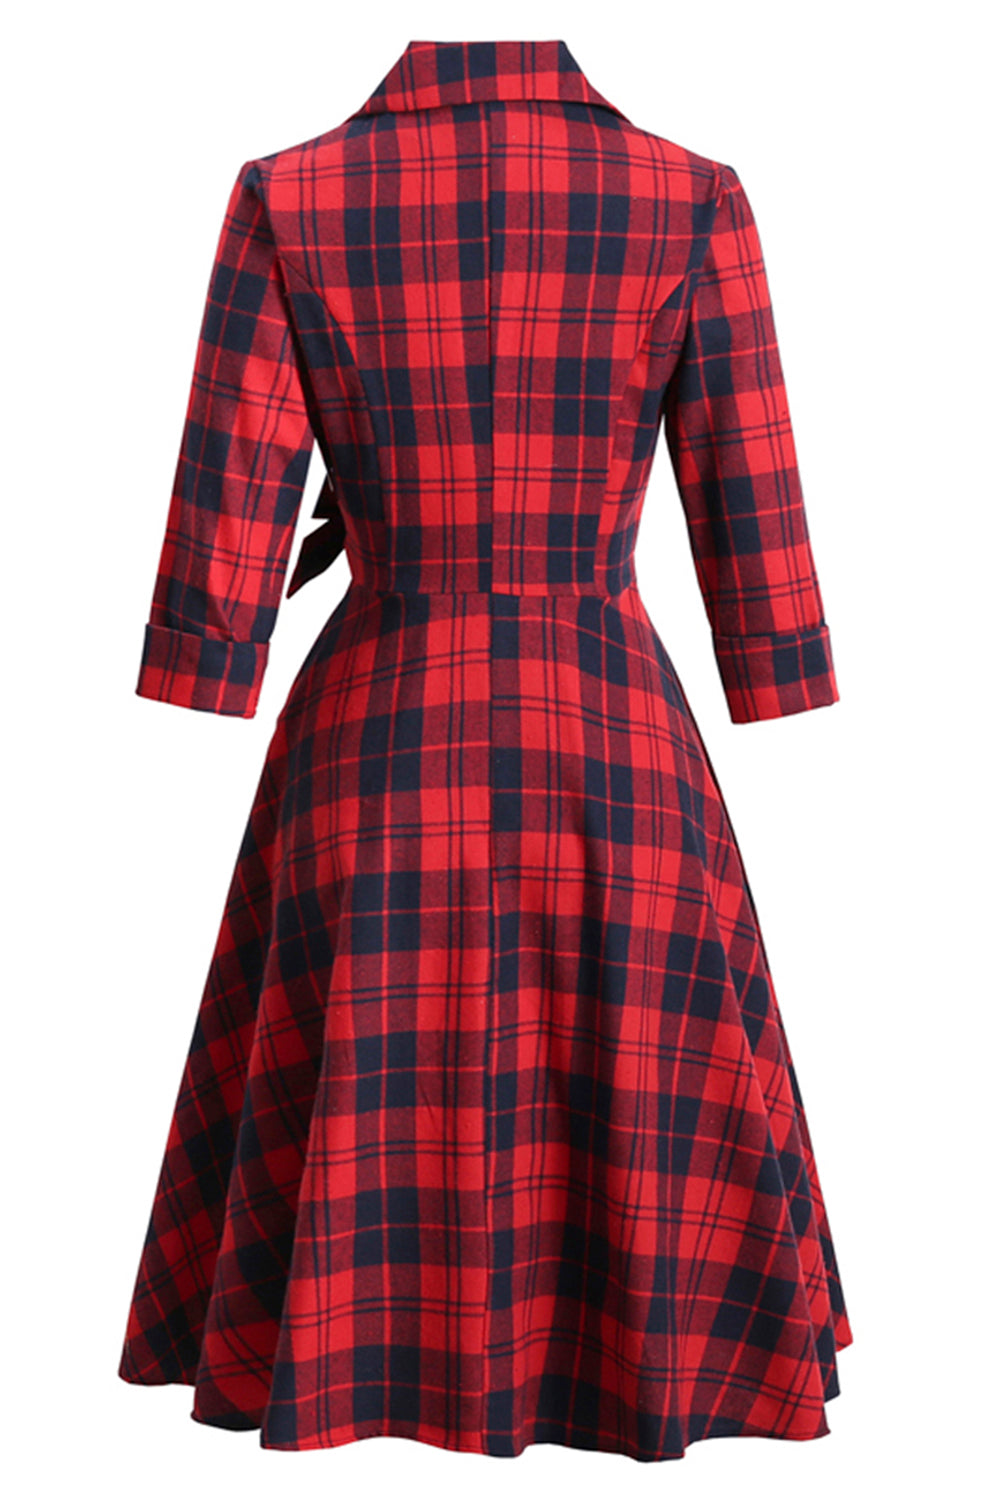 Red Plaid Vintage 1950s Dress